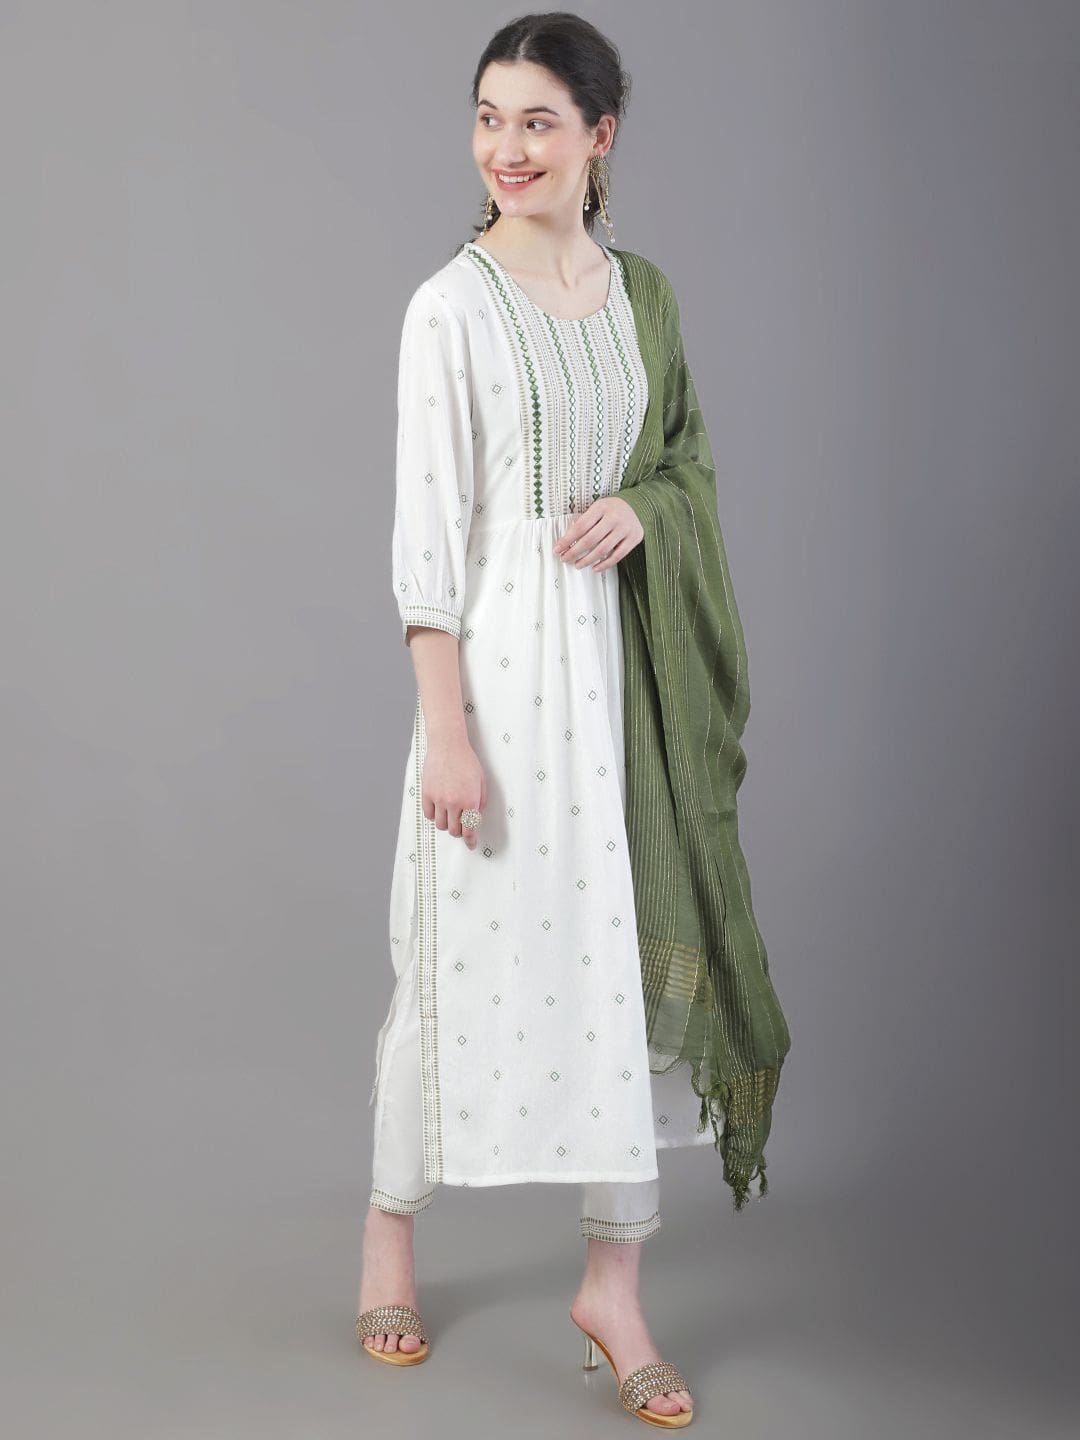 Classy White And Green Rayon Kurta Set For Women